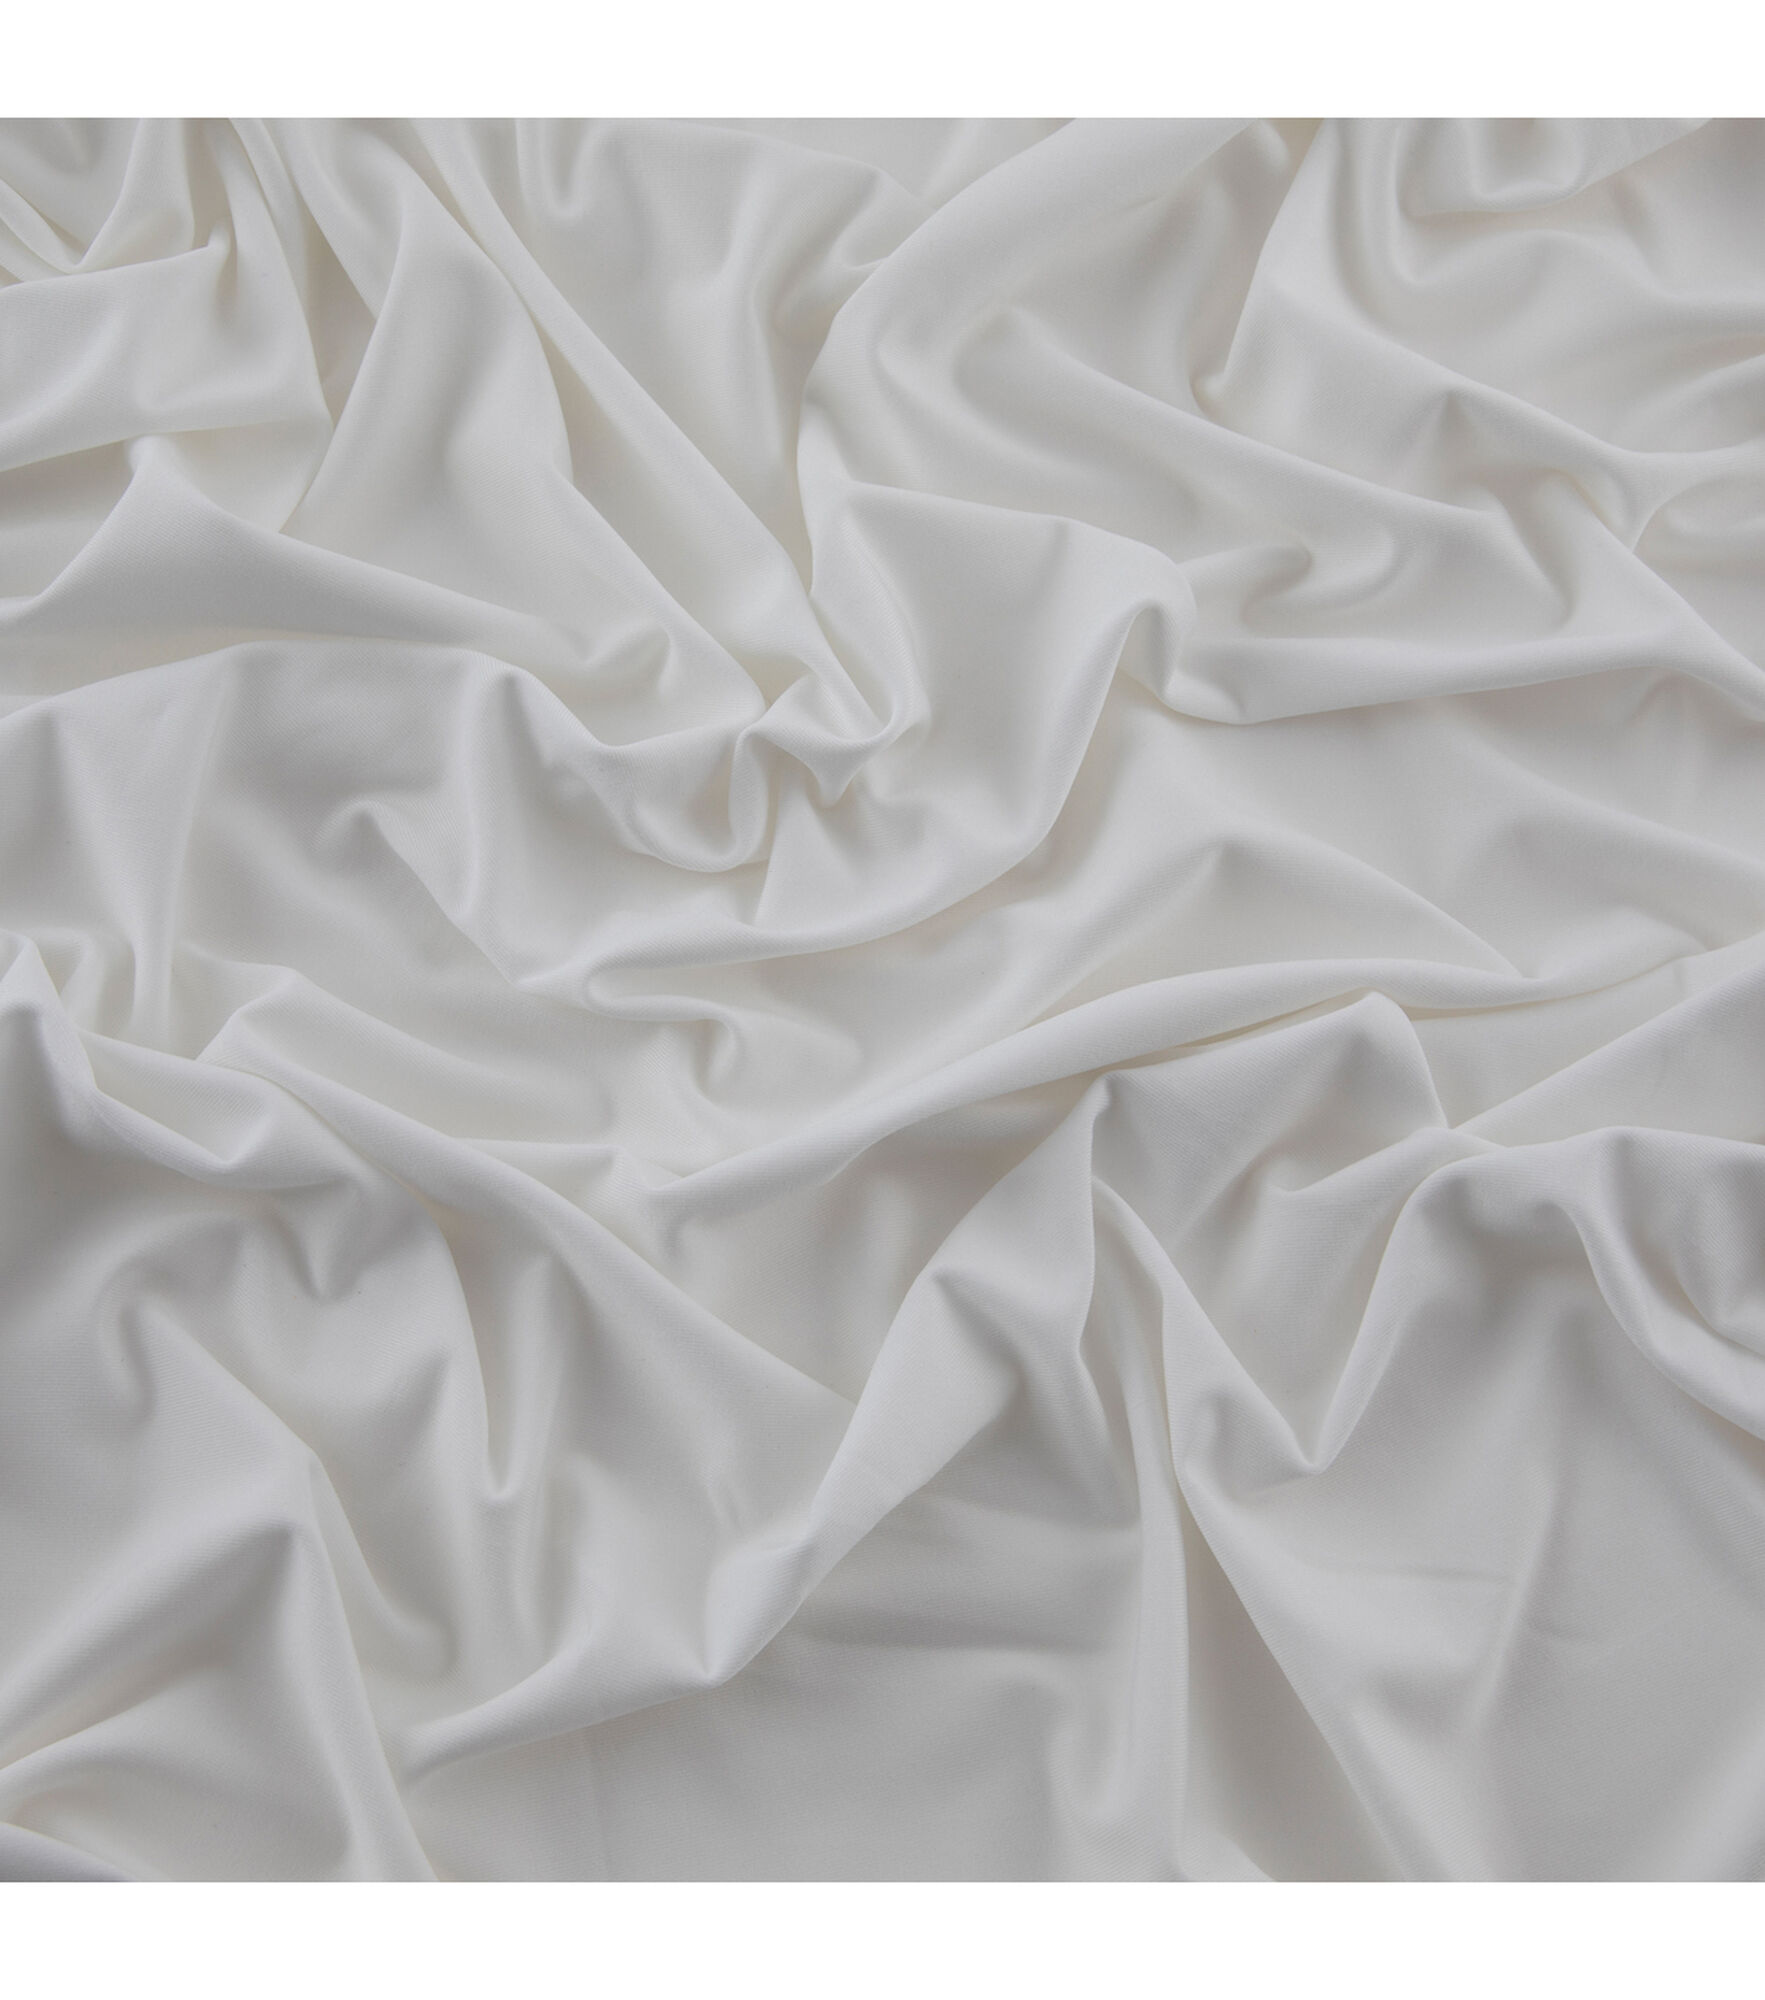 Breezy Polyester Elastane Performance Microfiber Apparel Fabric